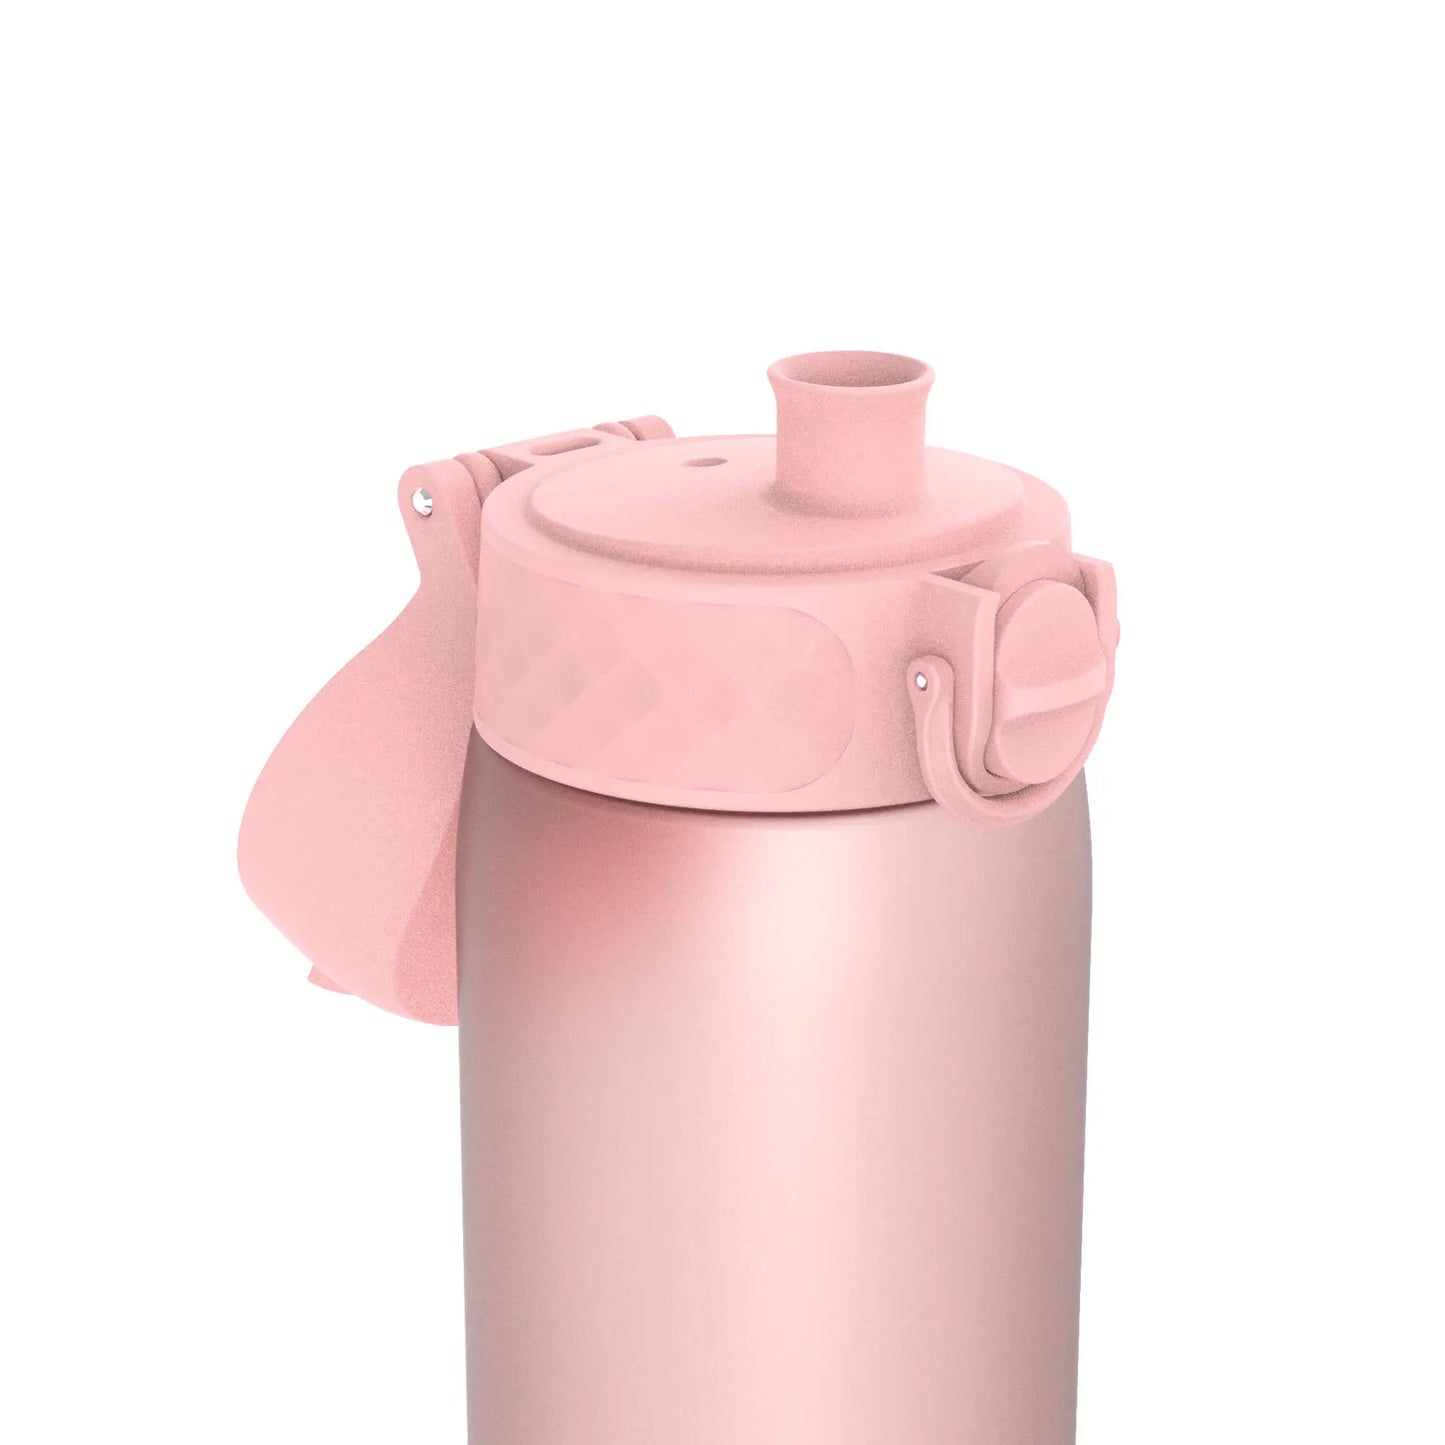 Leak Proof Slim Water Bottle, Recyclon™, Rose Quartz, 500ml (18oz) Ion8